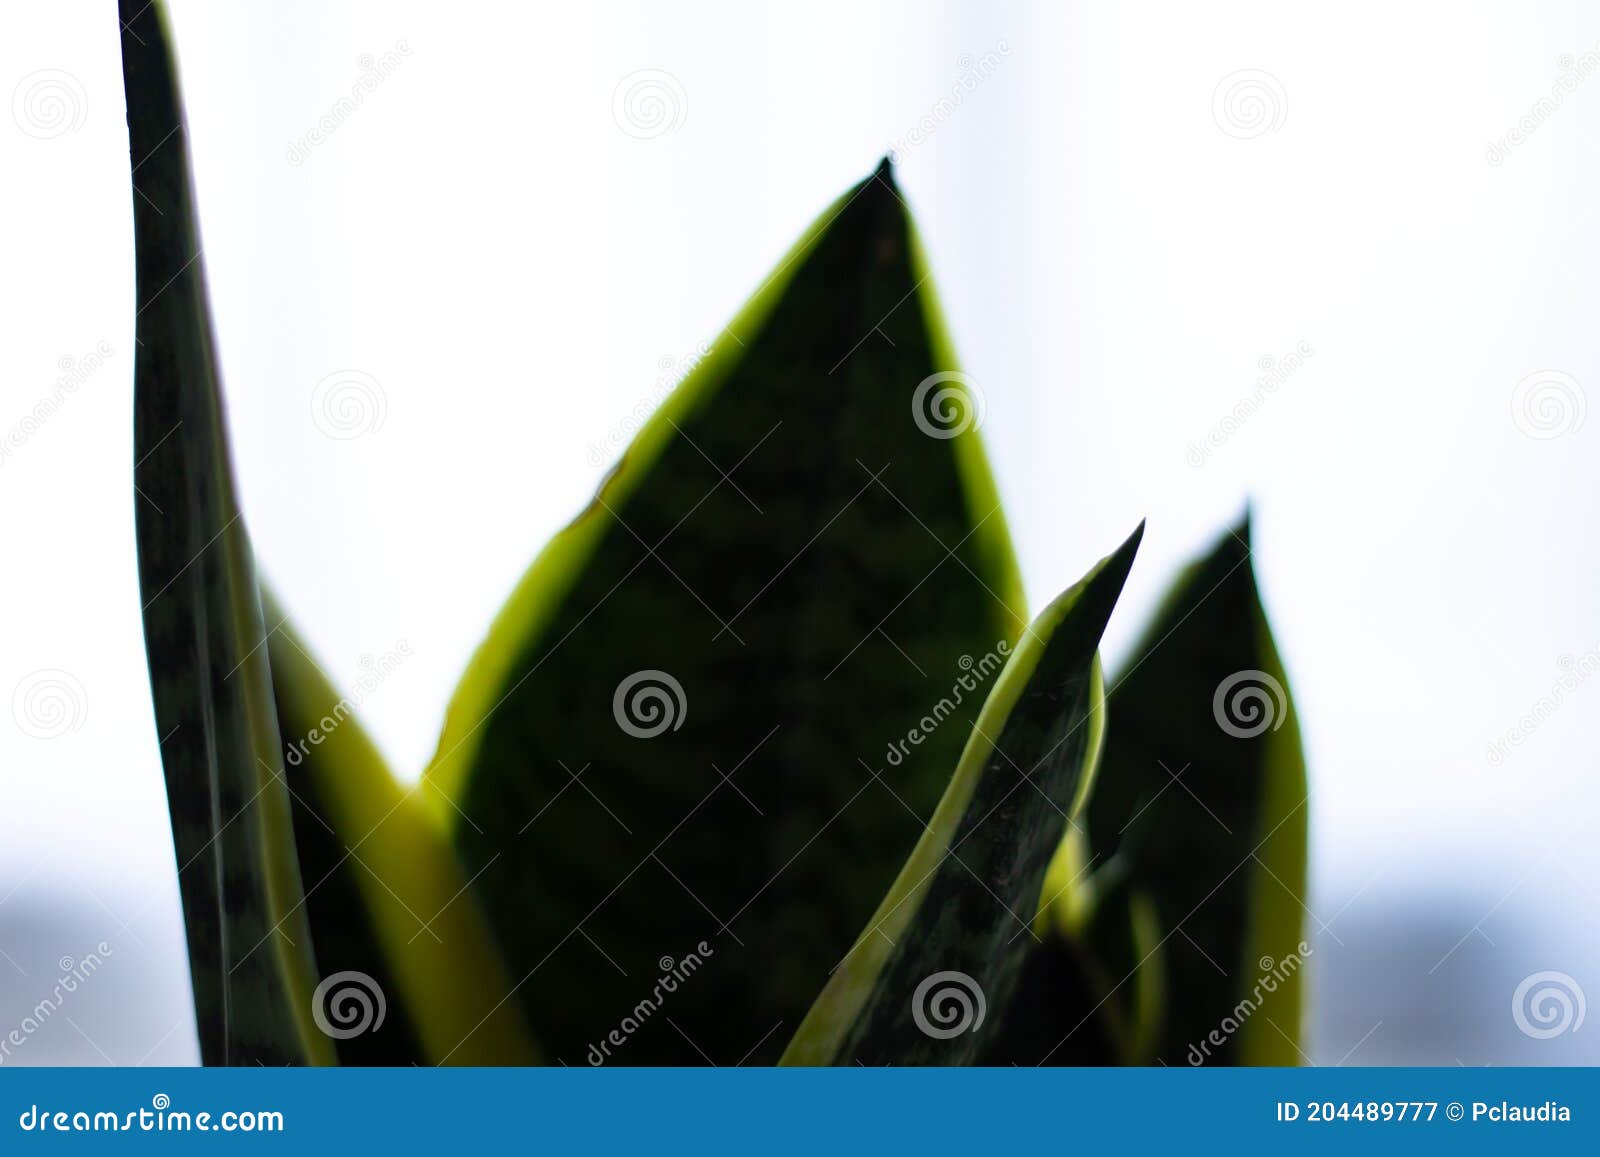 snake plant close-up on blurred background